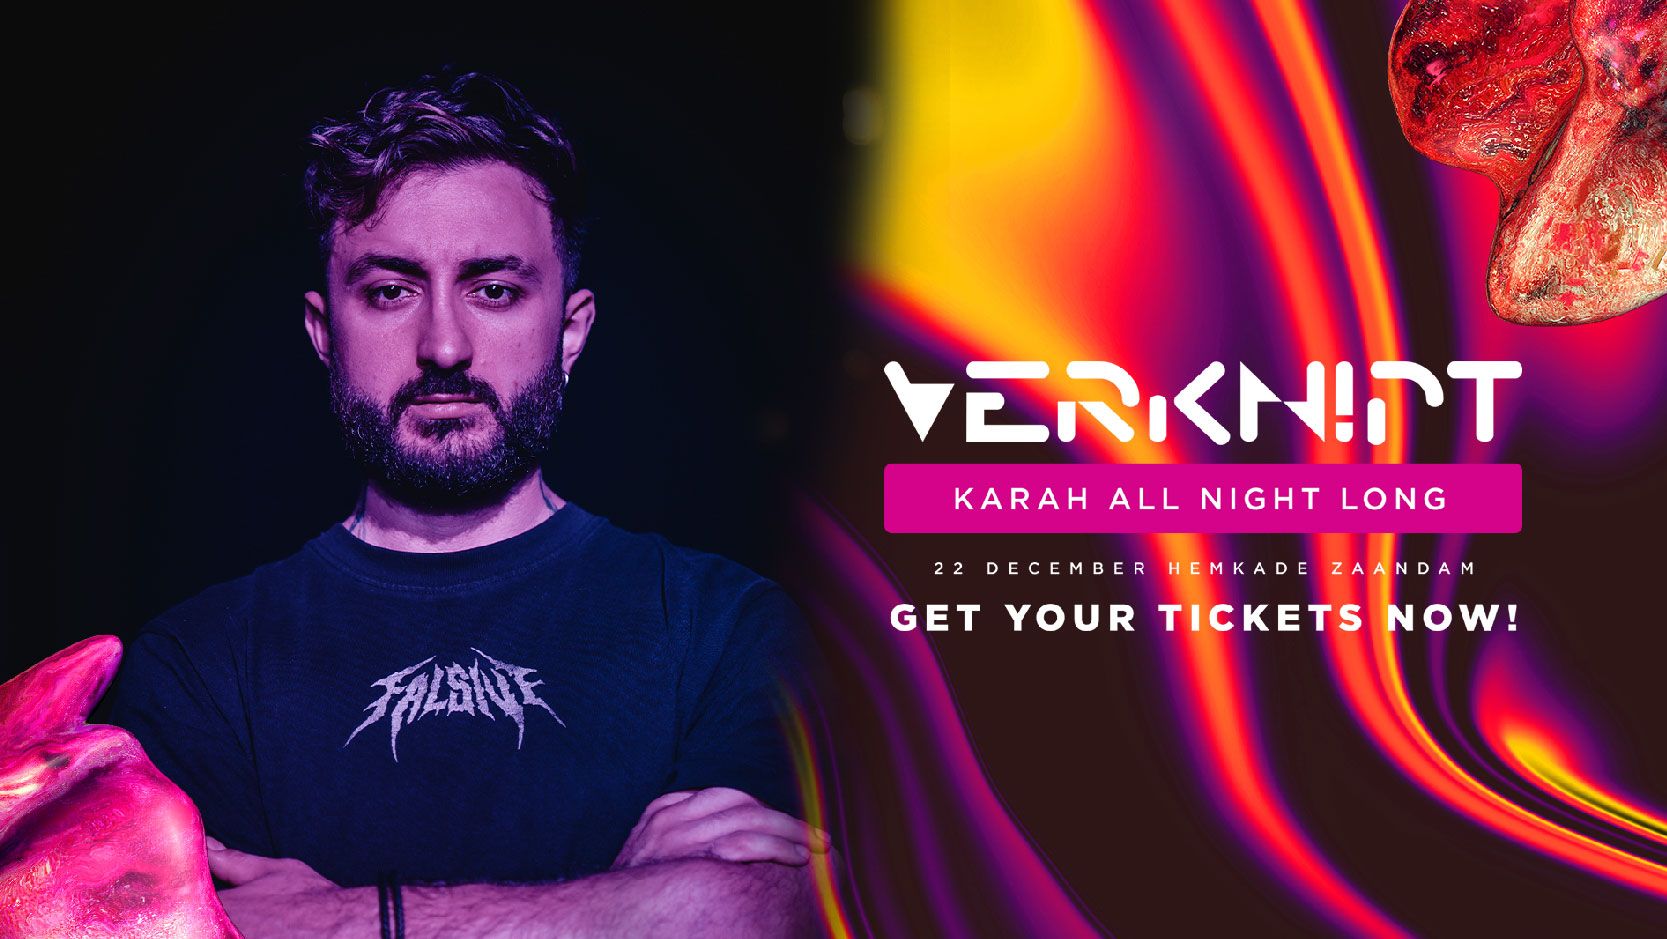 VERKNIPT Presents KARAH (all night long) cover